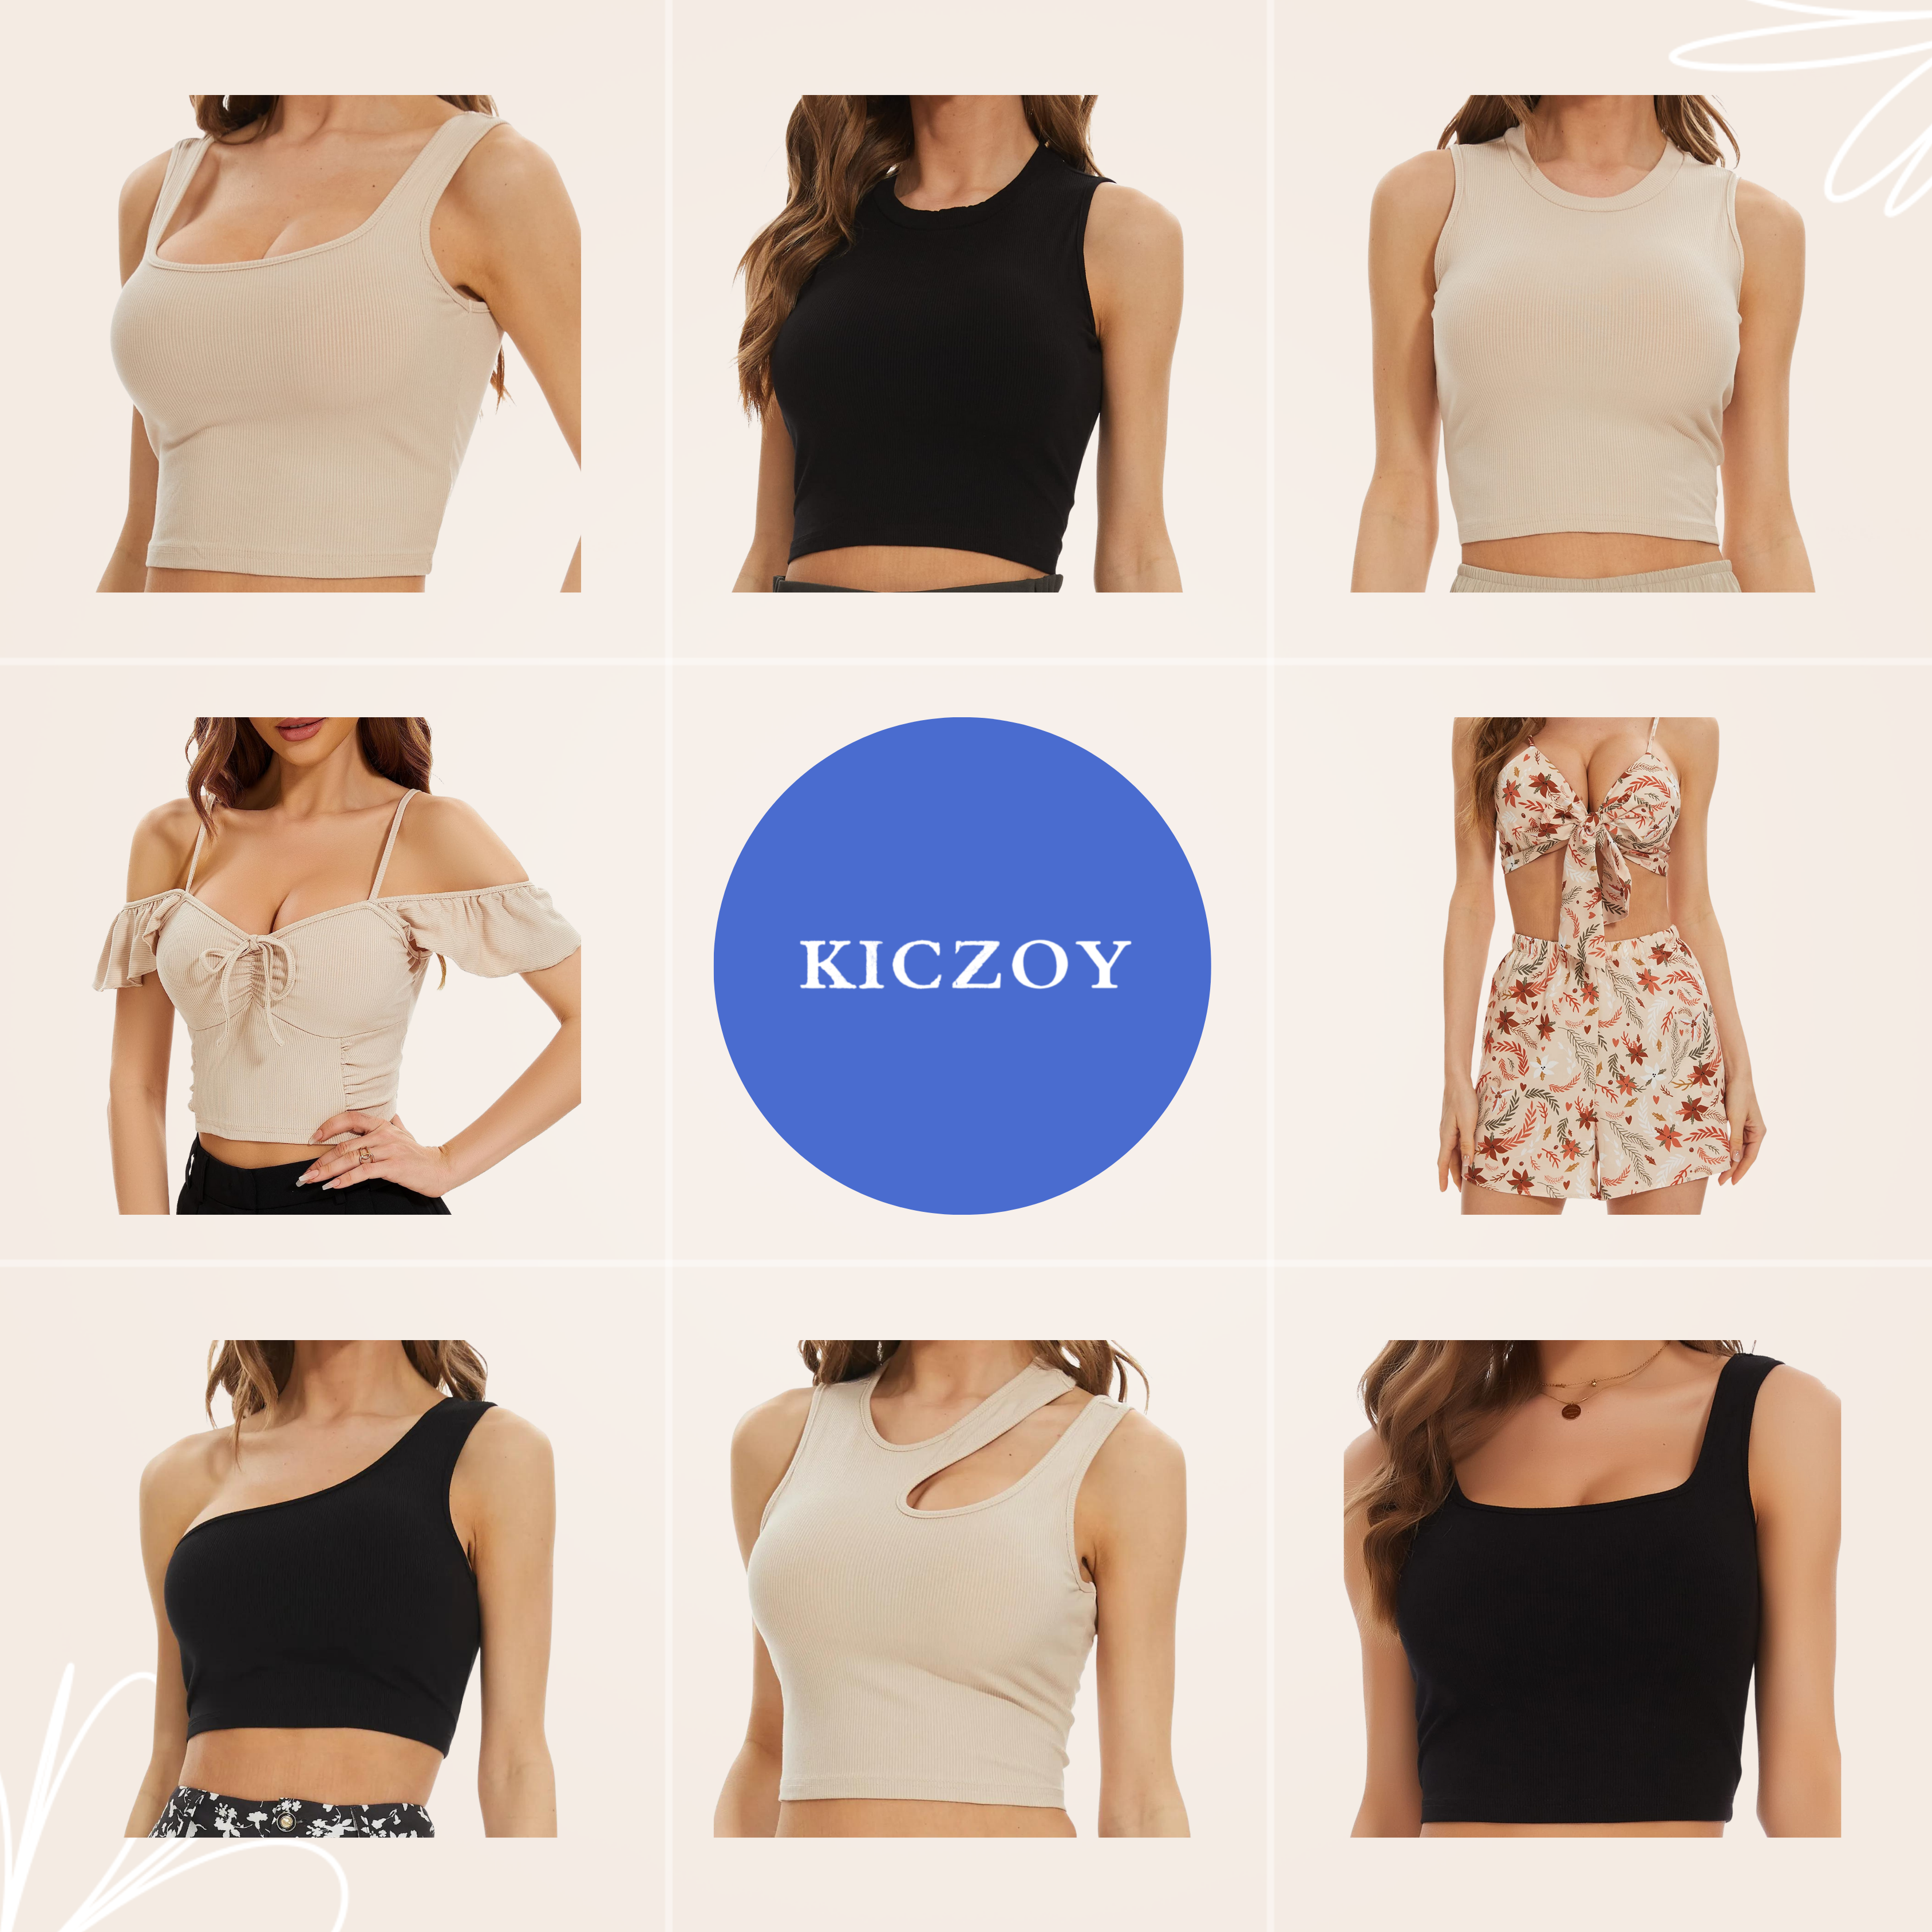 Brand image for KICZOY